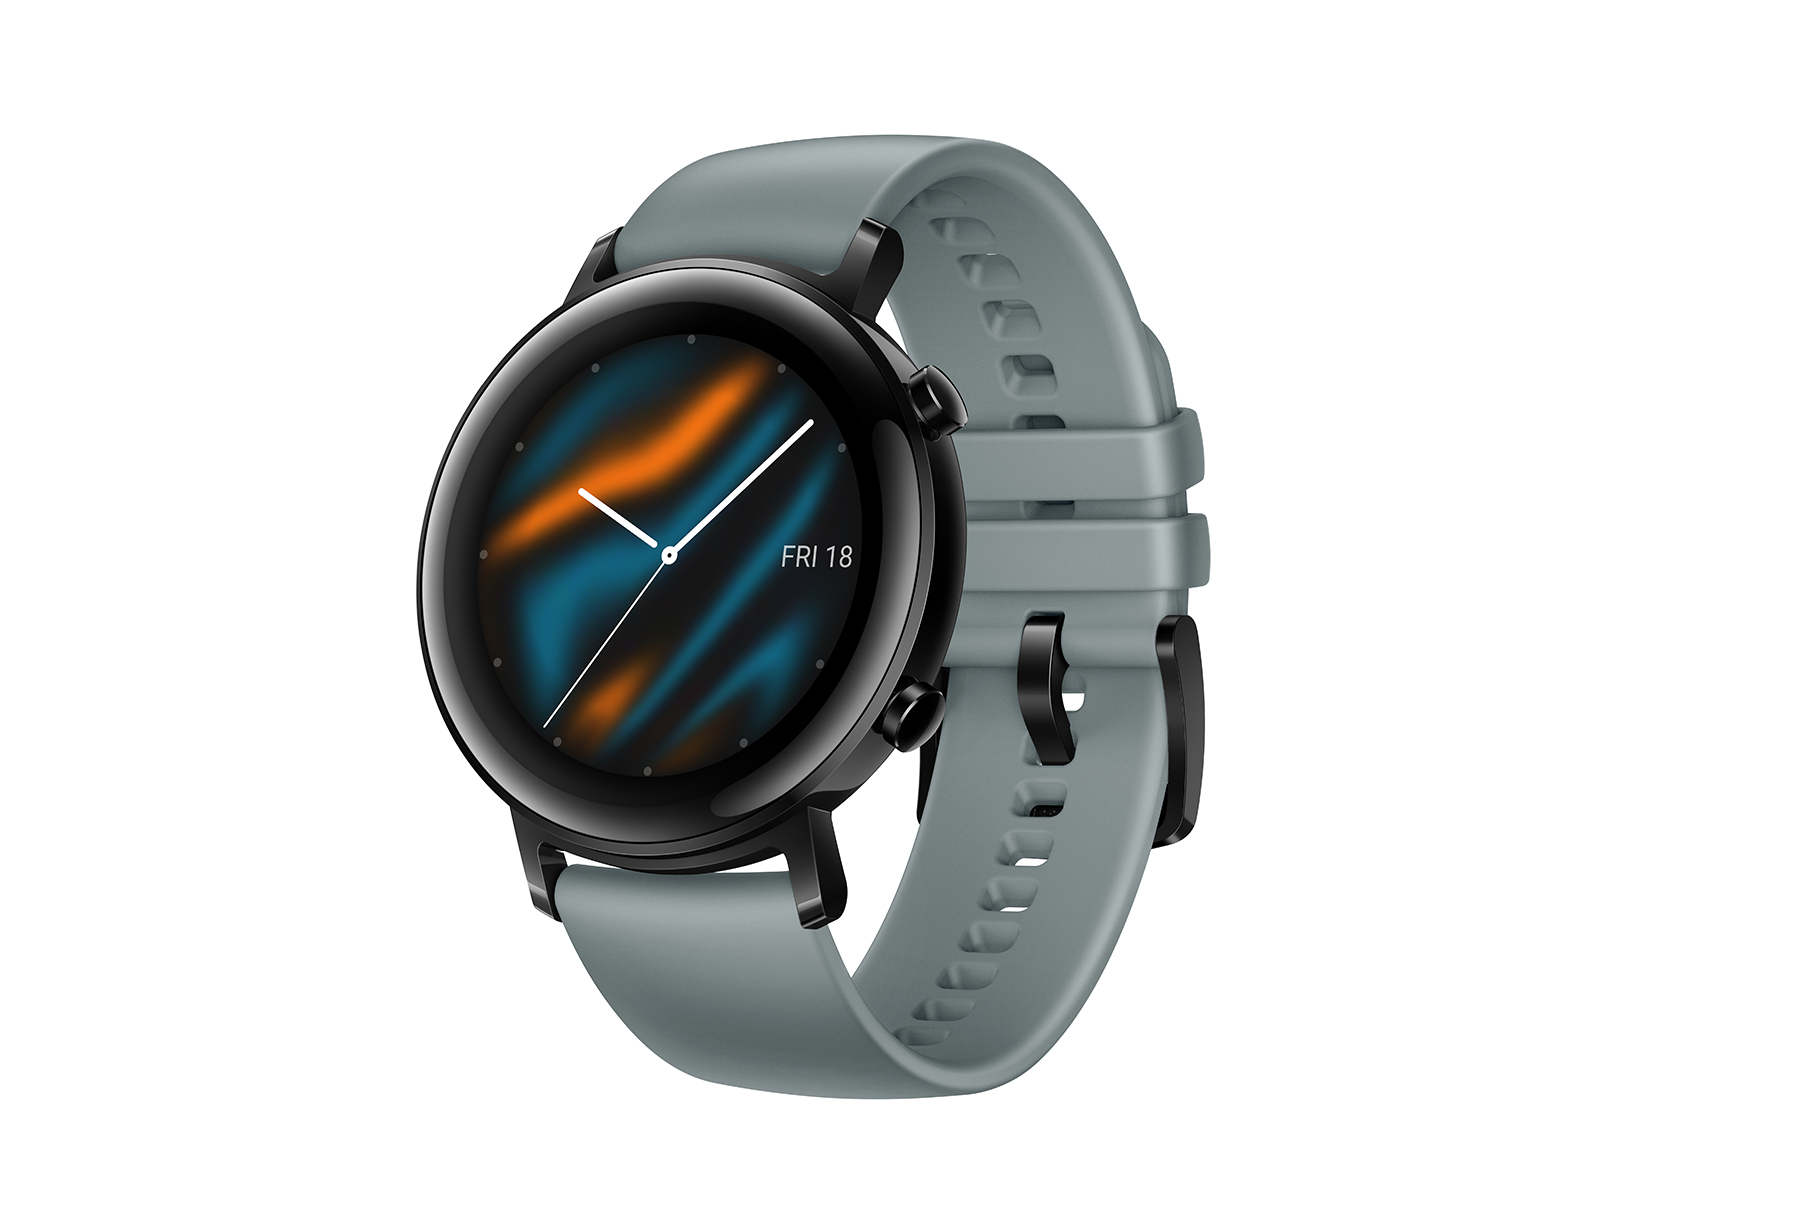 Huawei Watch GT 2 ساعة ذكية تراقب ضربات القلب وجودة النوم ومستوى الإجهاد